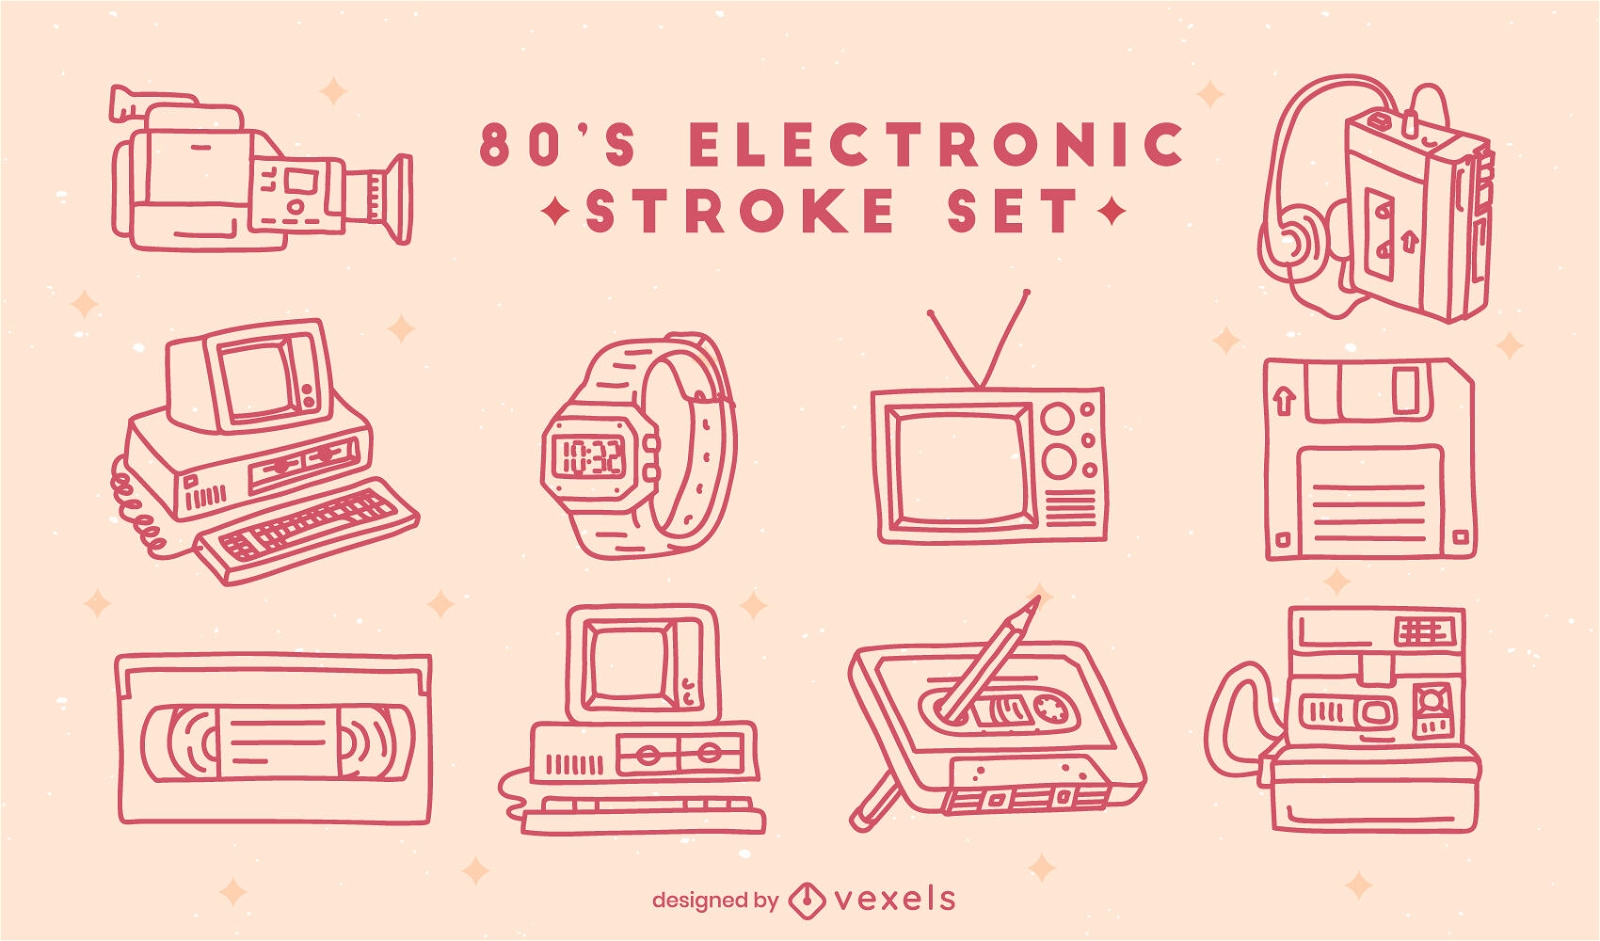 Elementos de tecnologia eletrônica dos anos 80 definir curso